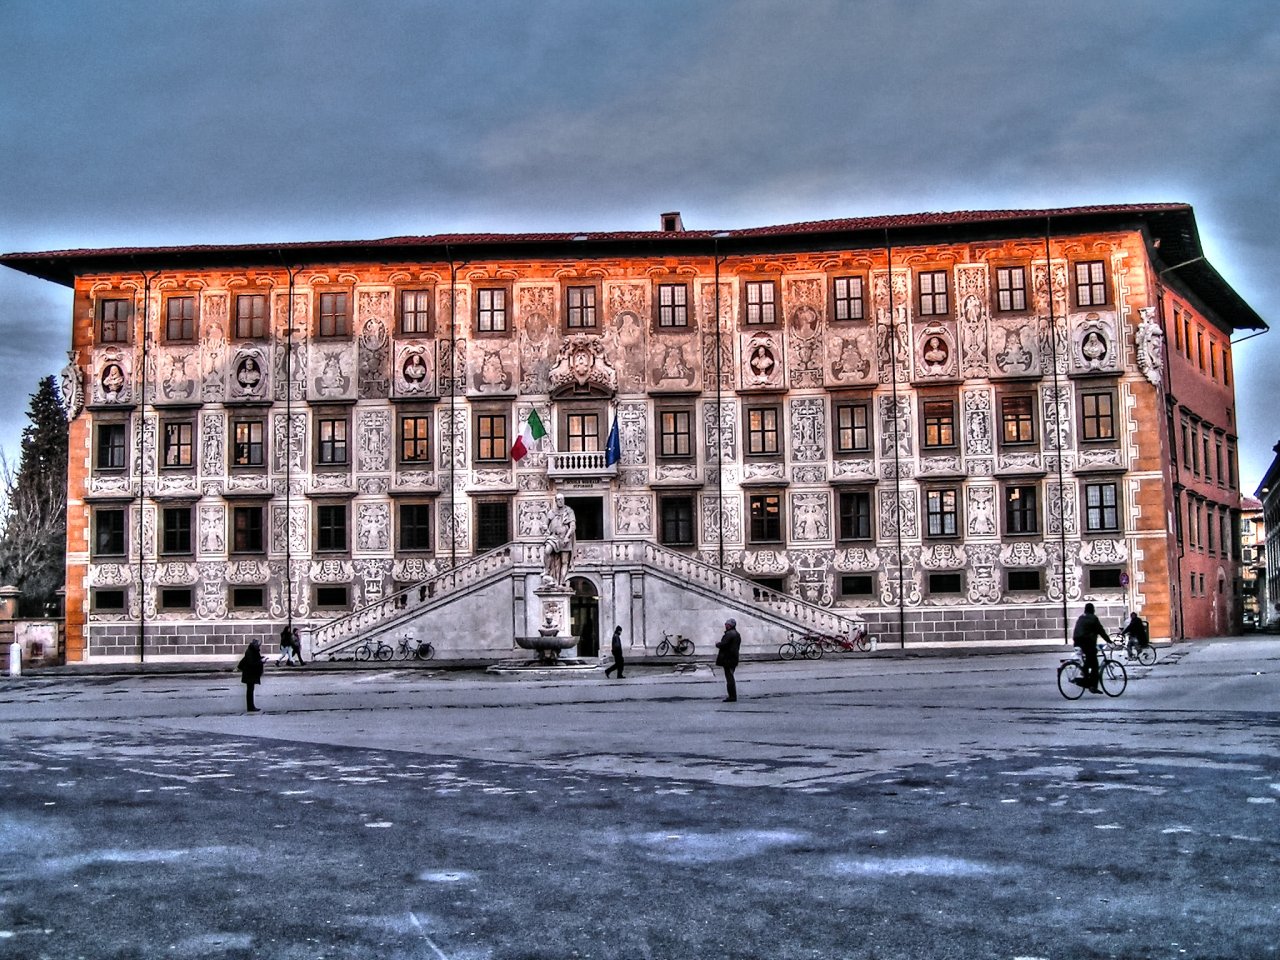 Palazzo della Carovana, Piazza dei Cavalieri, Pisa, Tuscany, Italy